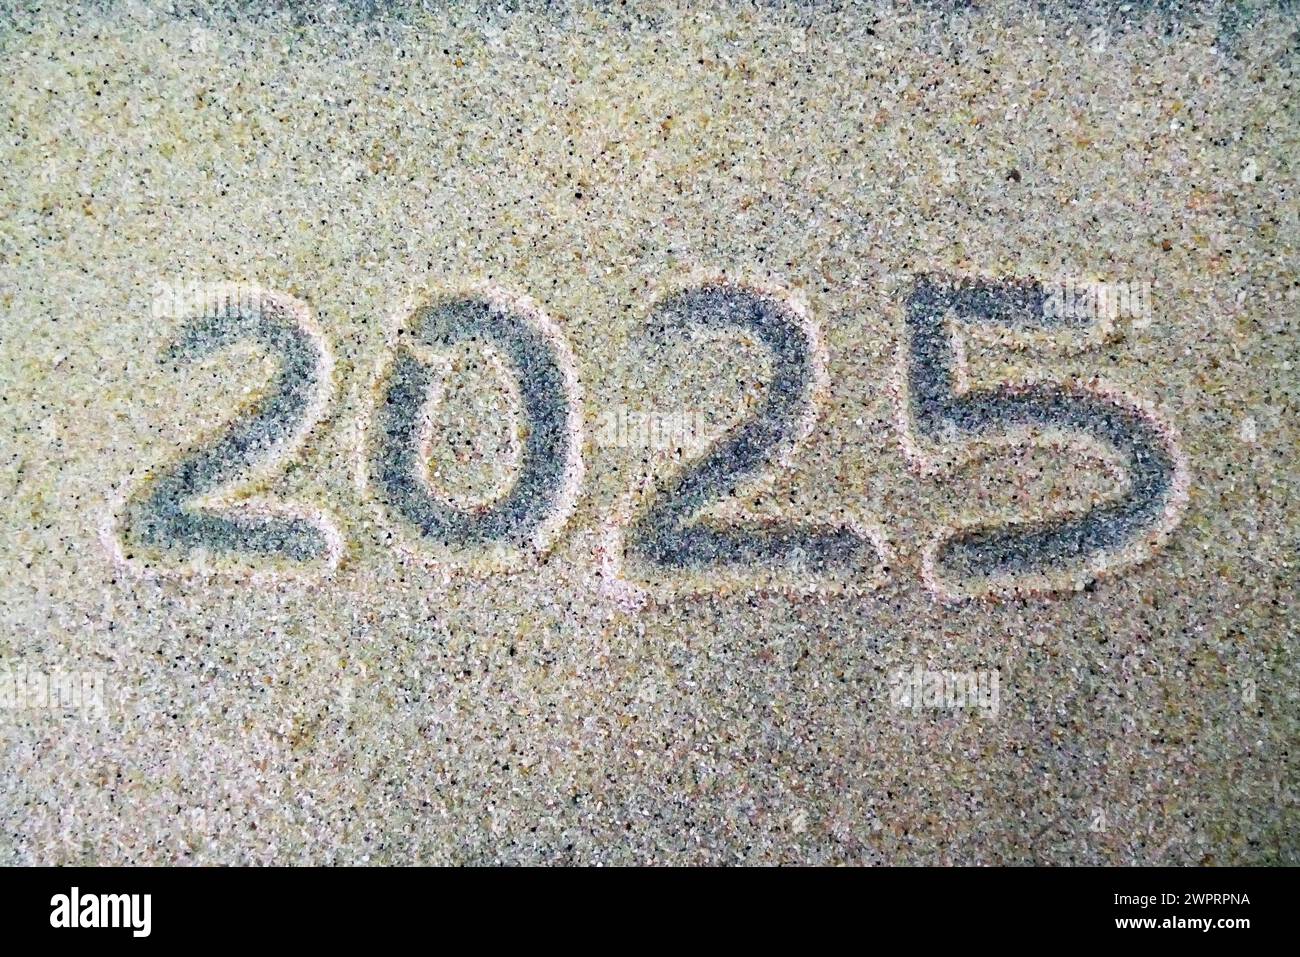 Handwritten New Year 20205 in the sand Stock Photo